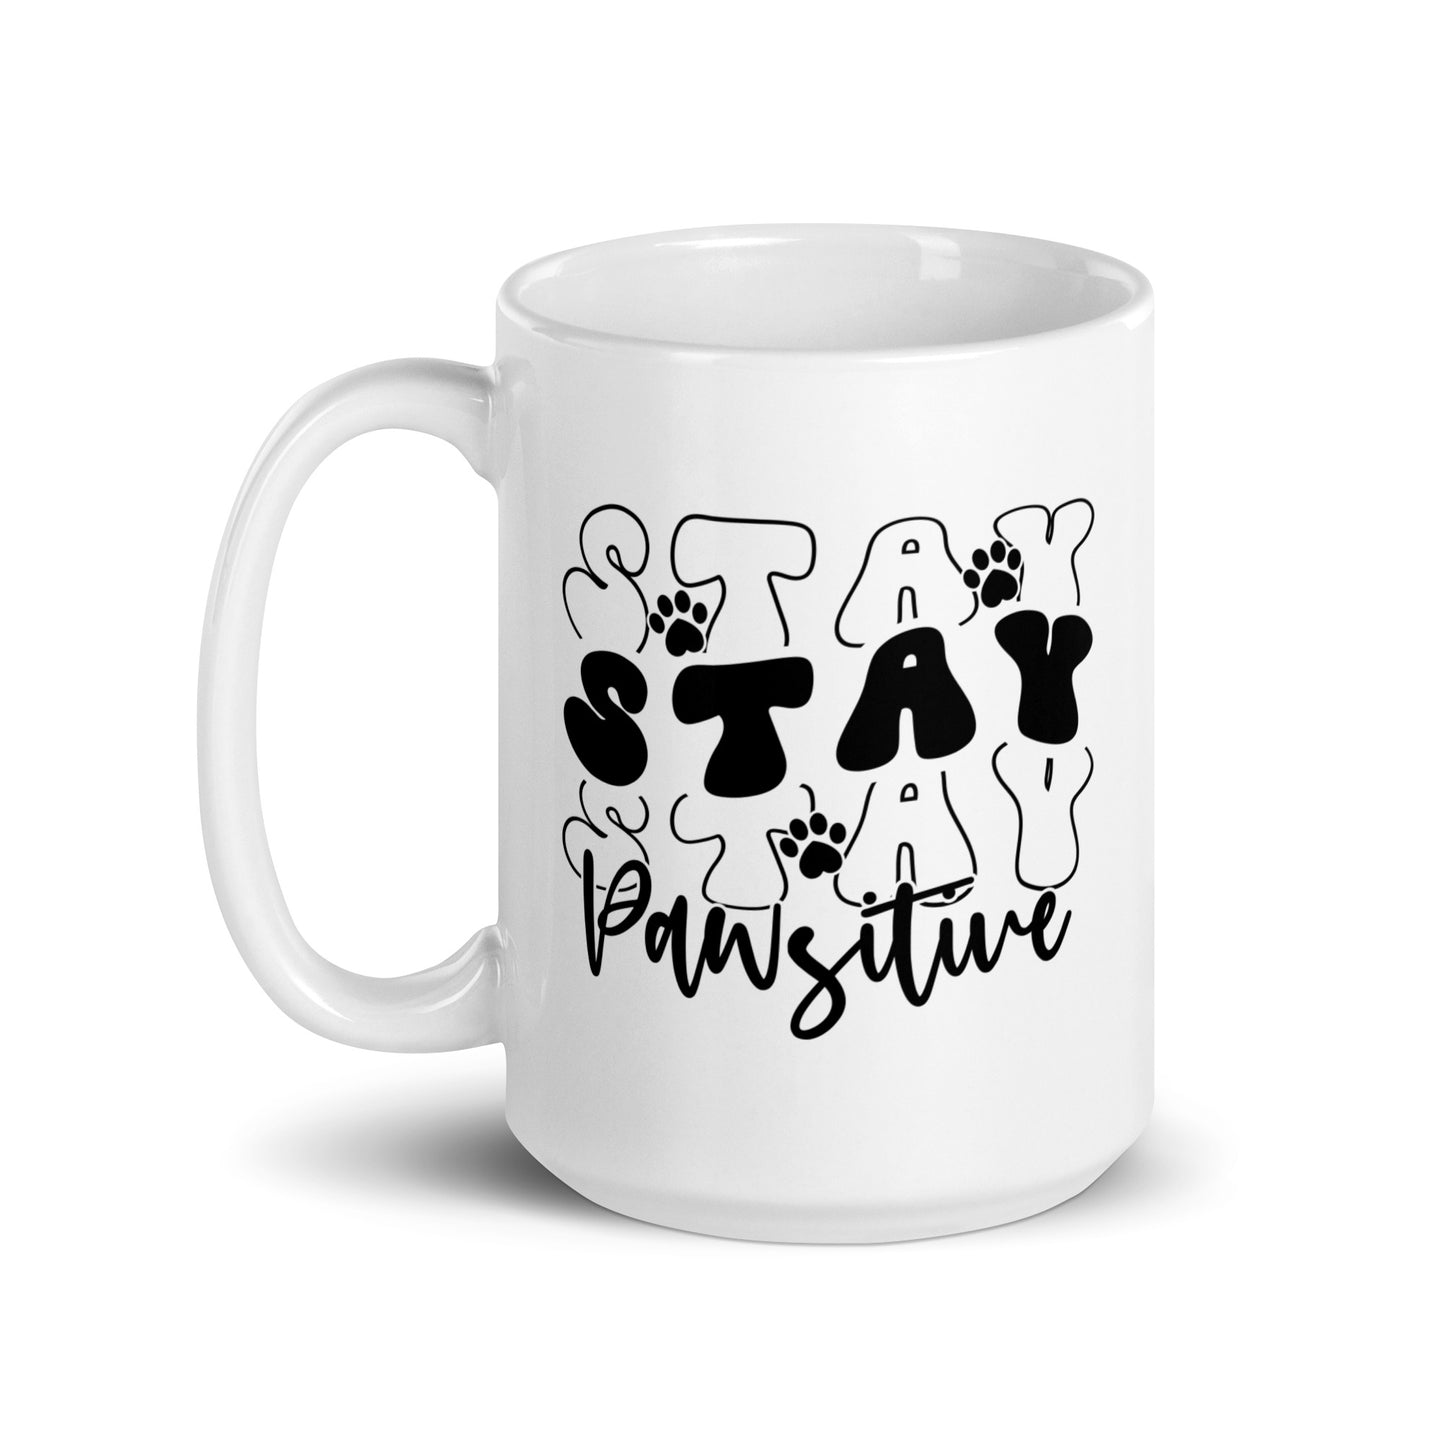 Stay Stay Stay Pawsitive Coffee Mug